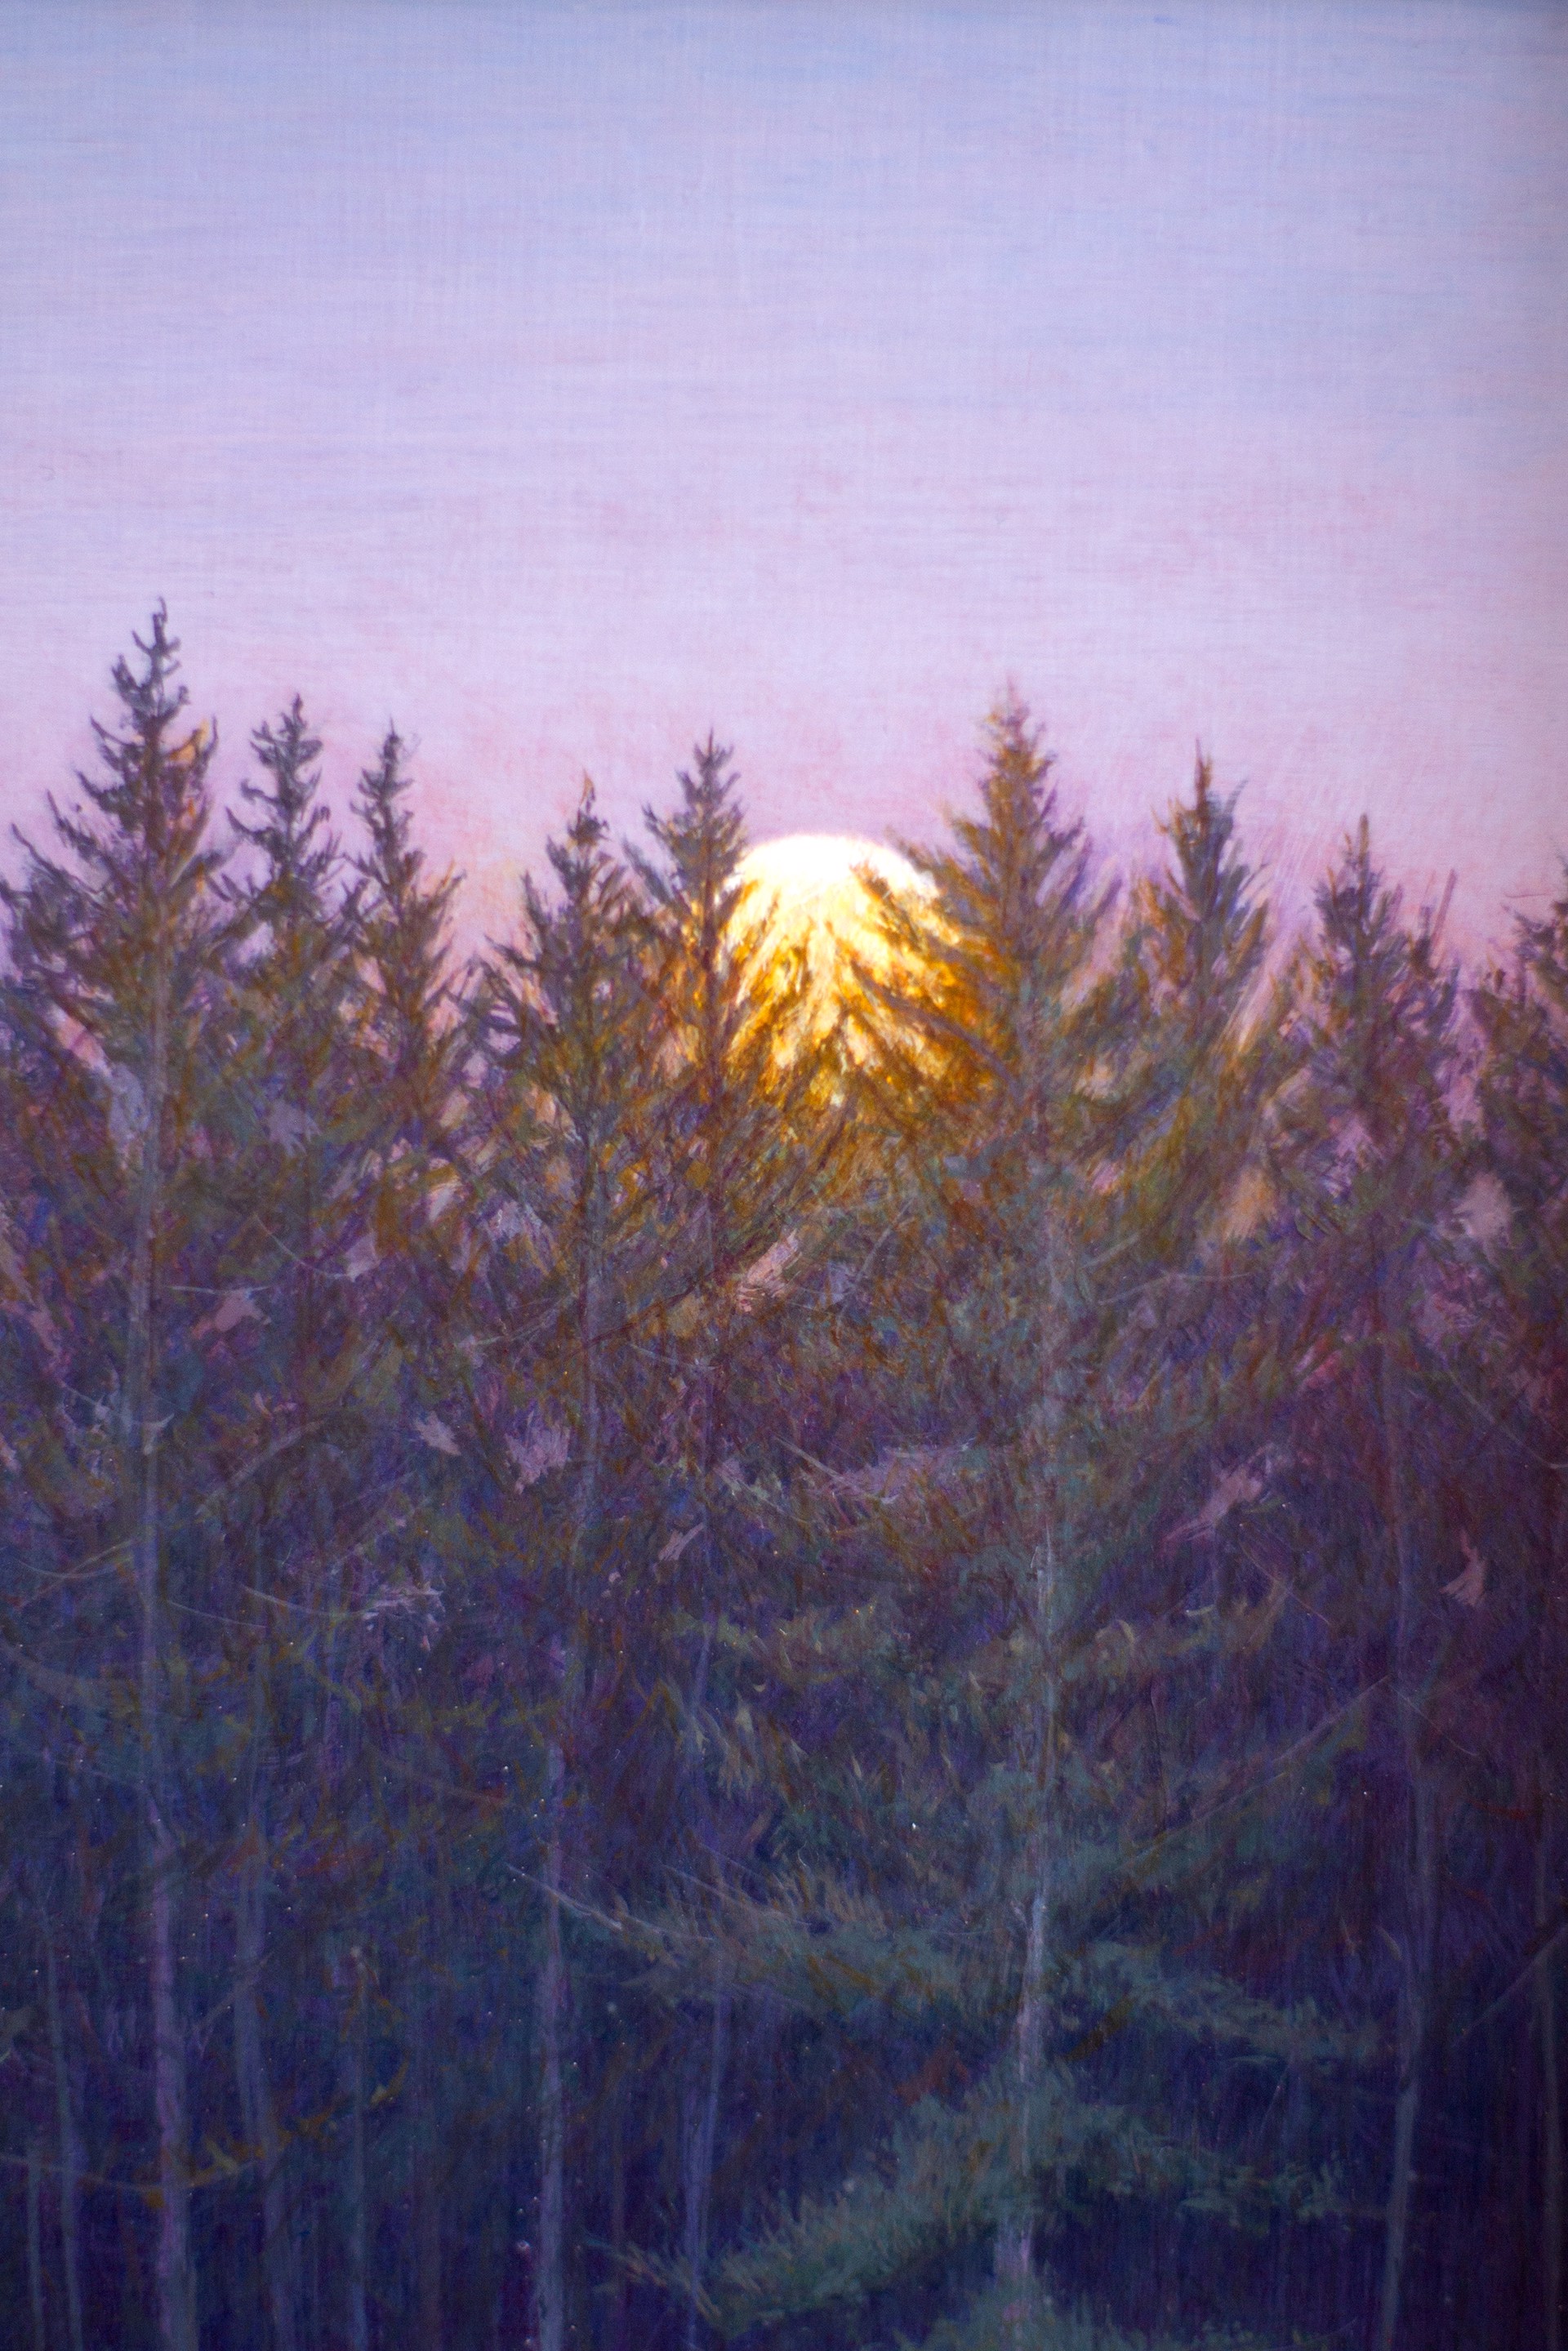 Maine Moonrise by Daniel Ambrose